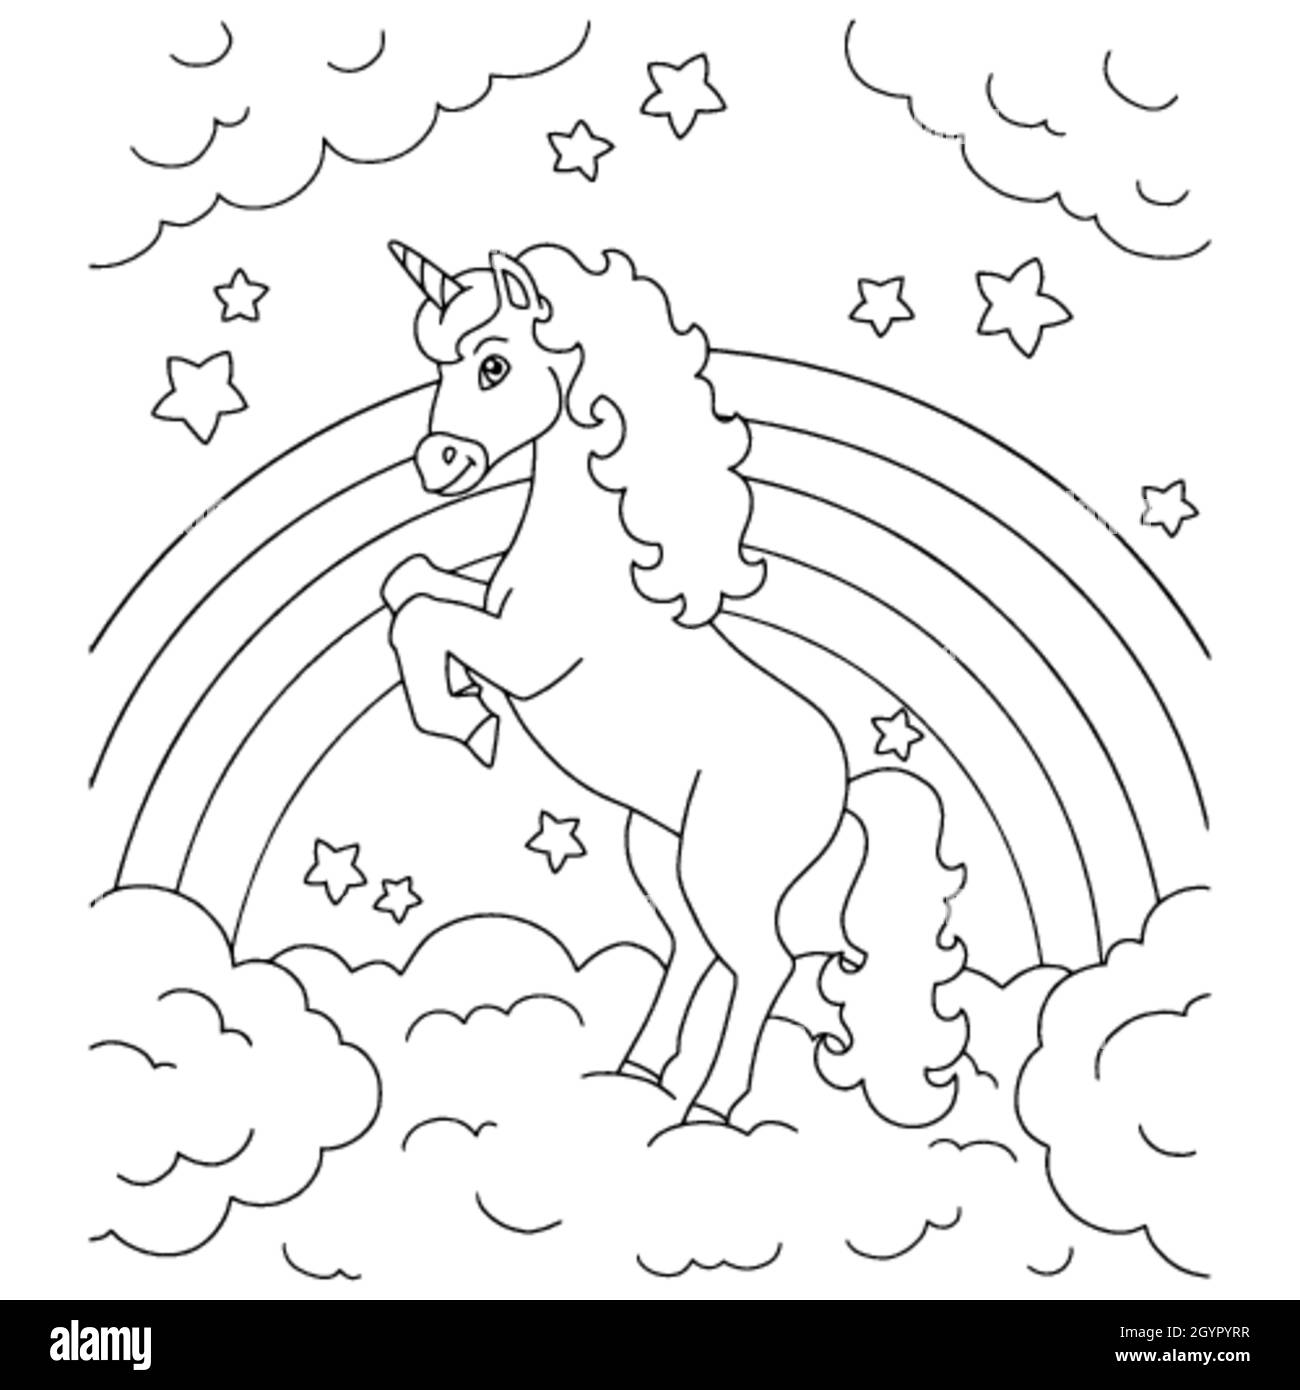 Unicornio en una nube pãgina de libro para colorear para niãos carãcter de tilo de dibujos animados ilustraciãn vectorial aislada sobre fondo blanco imagen vector de stock